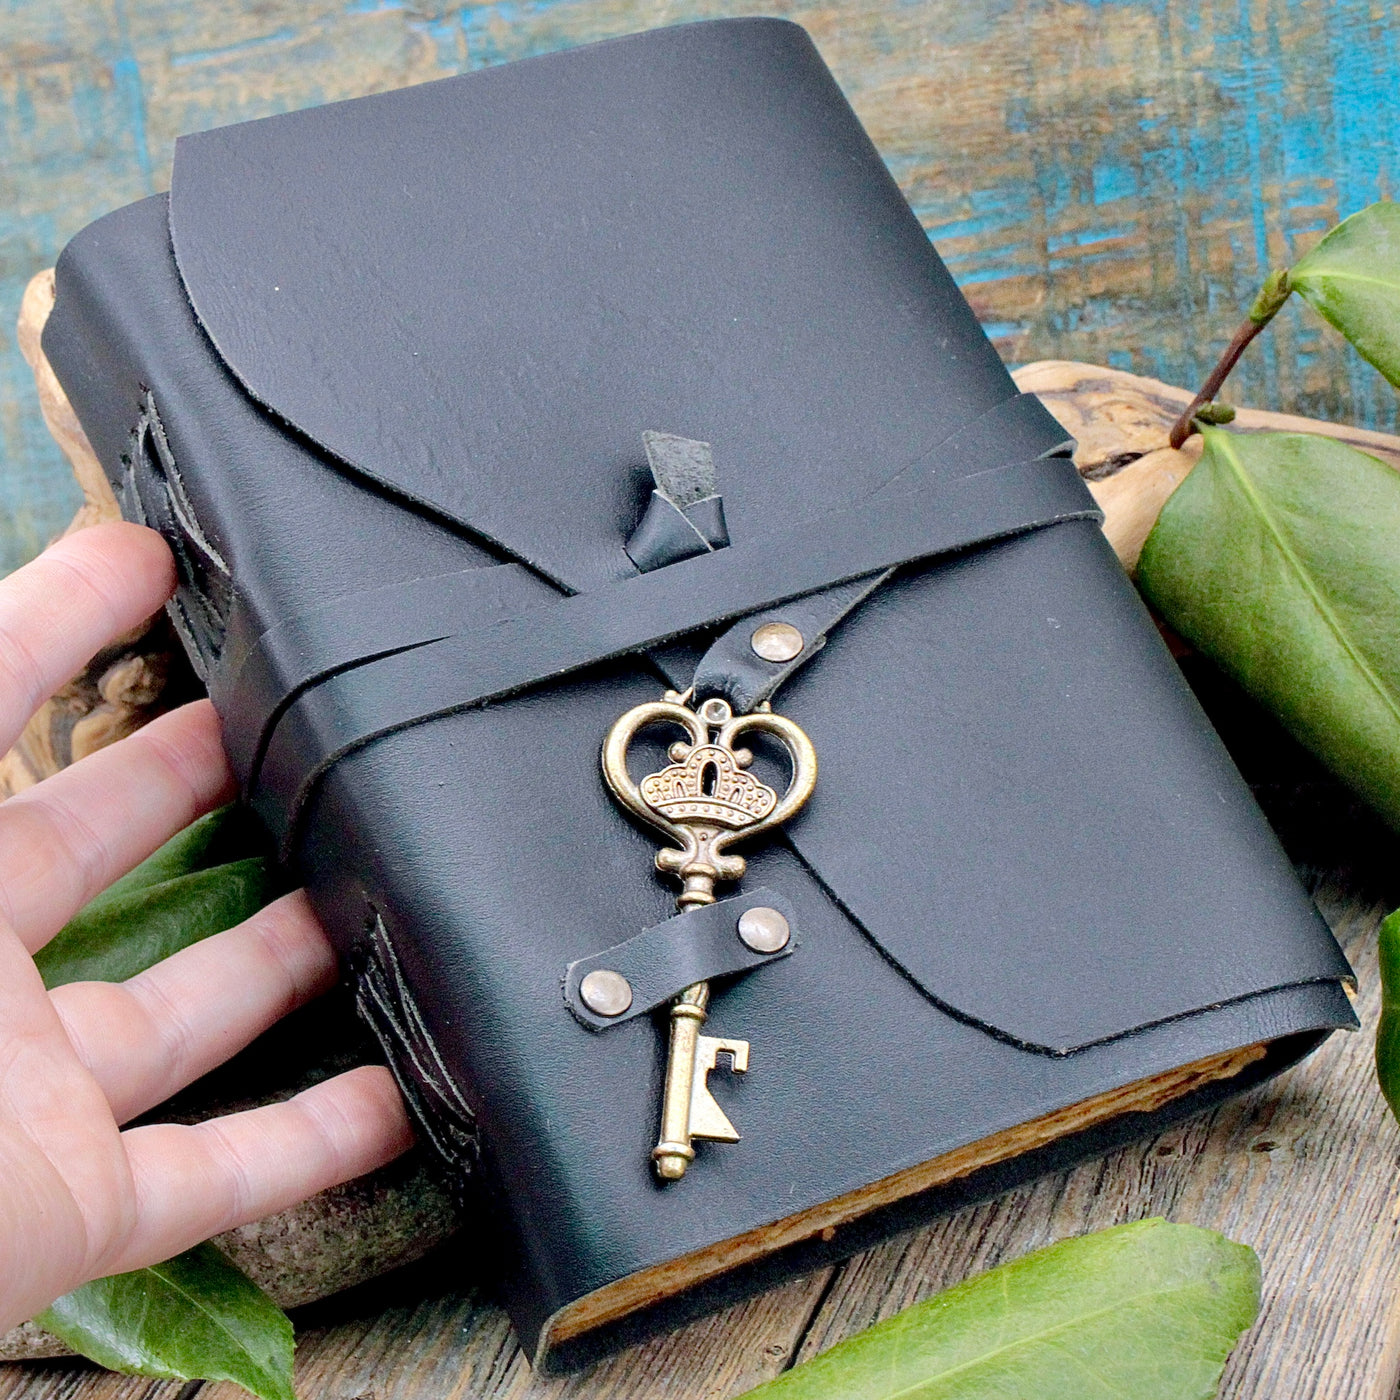 Leather Journal - Key